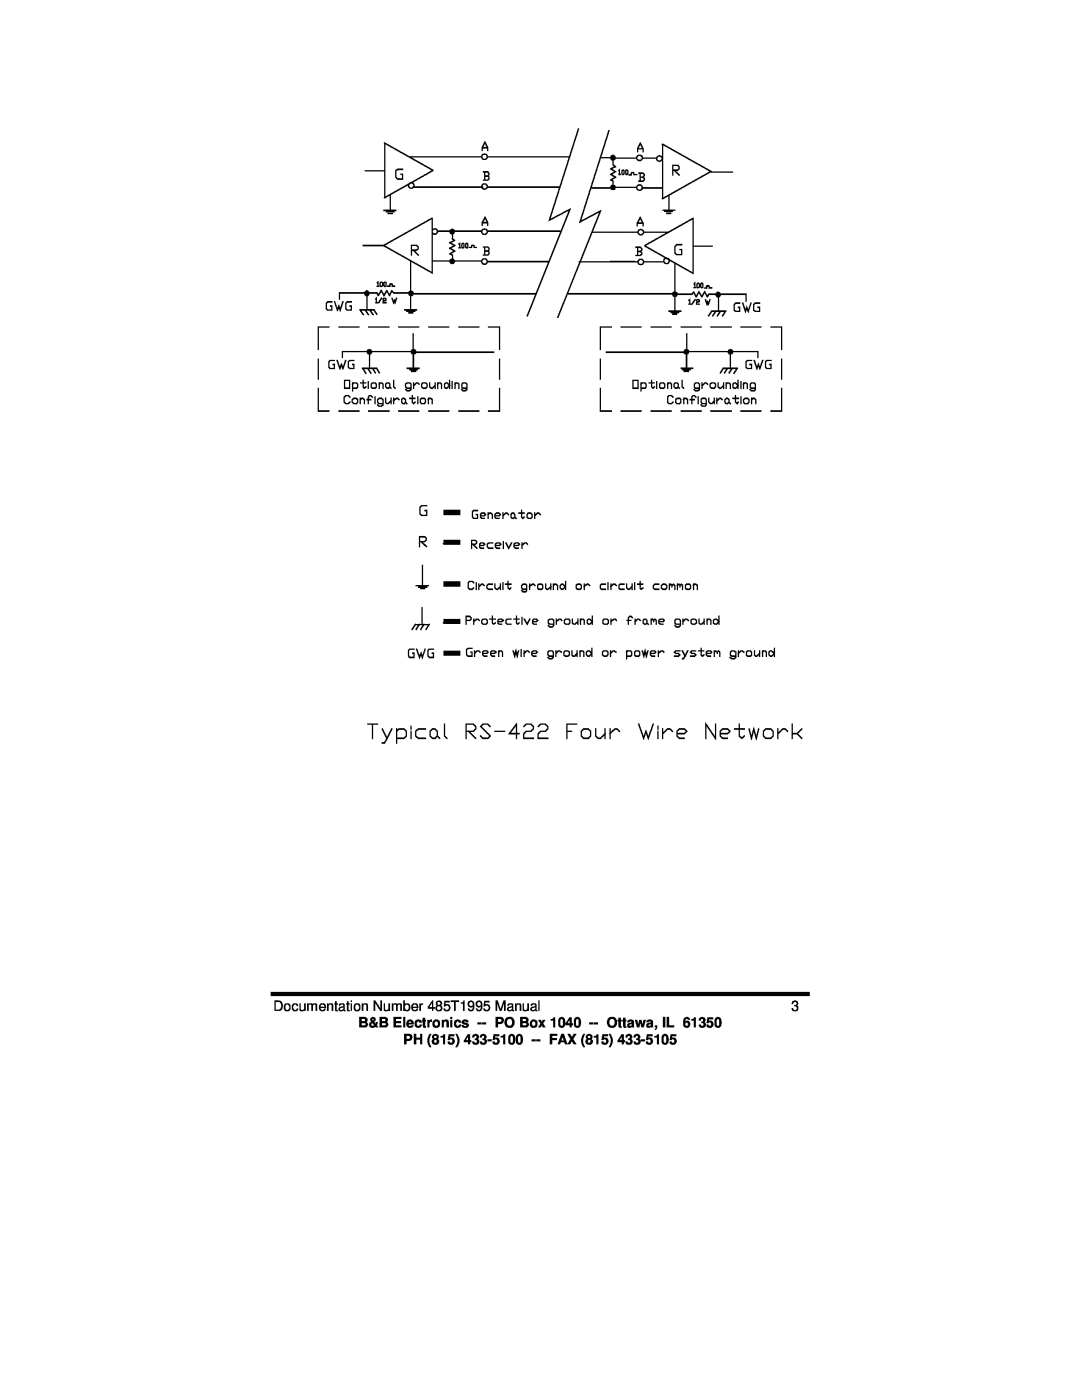 B&B Electronics manual Documentation Number 485T1995 Manual, B&B Electronics -- PO Box 1040 -- Ottawa, IL, Ph, FAX 815 